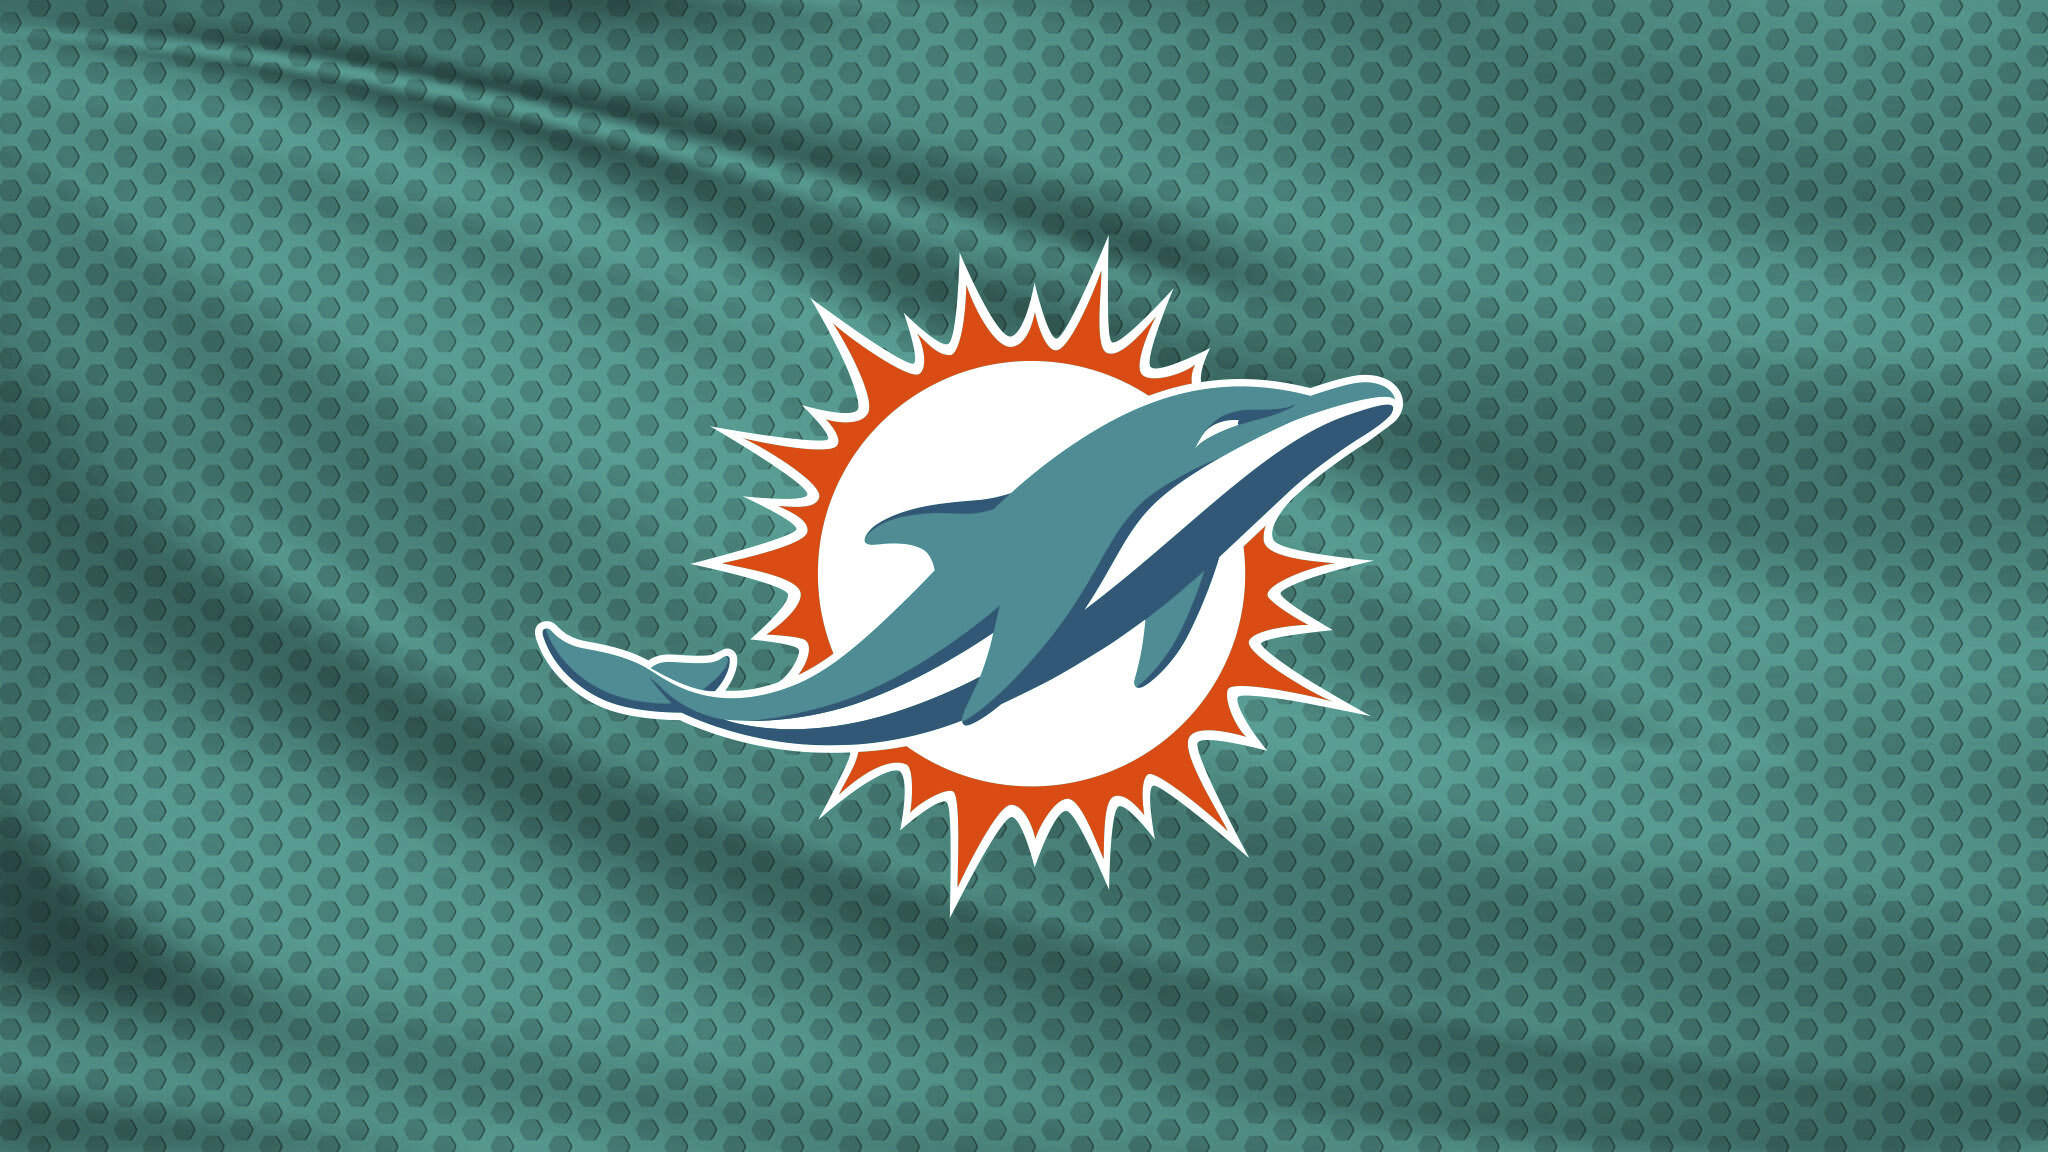 Luxury & Suites: Miami Dolphins v New York Jets